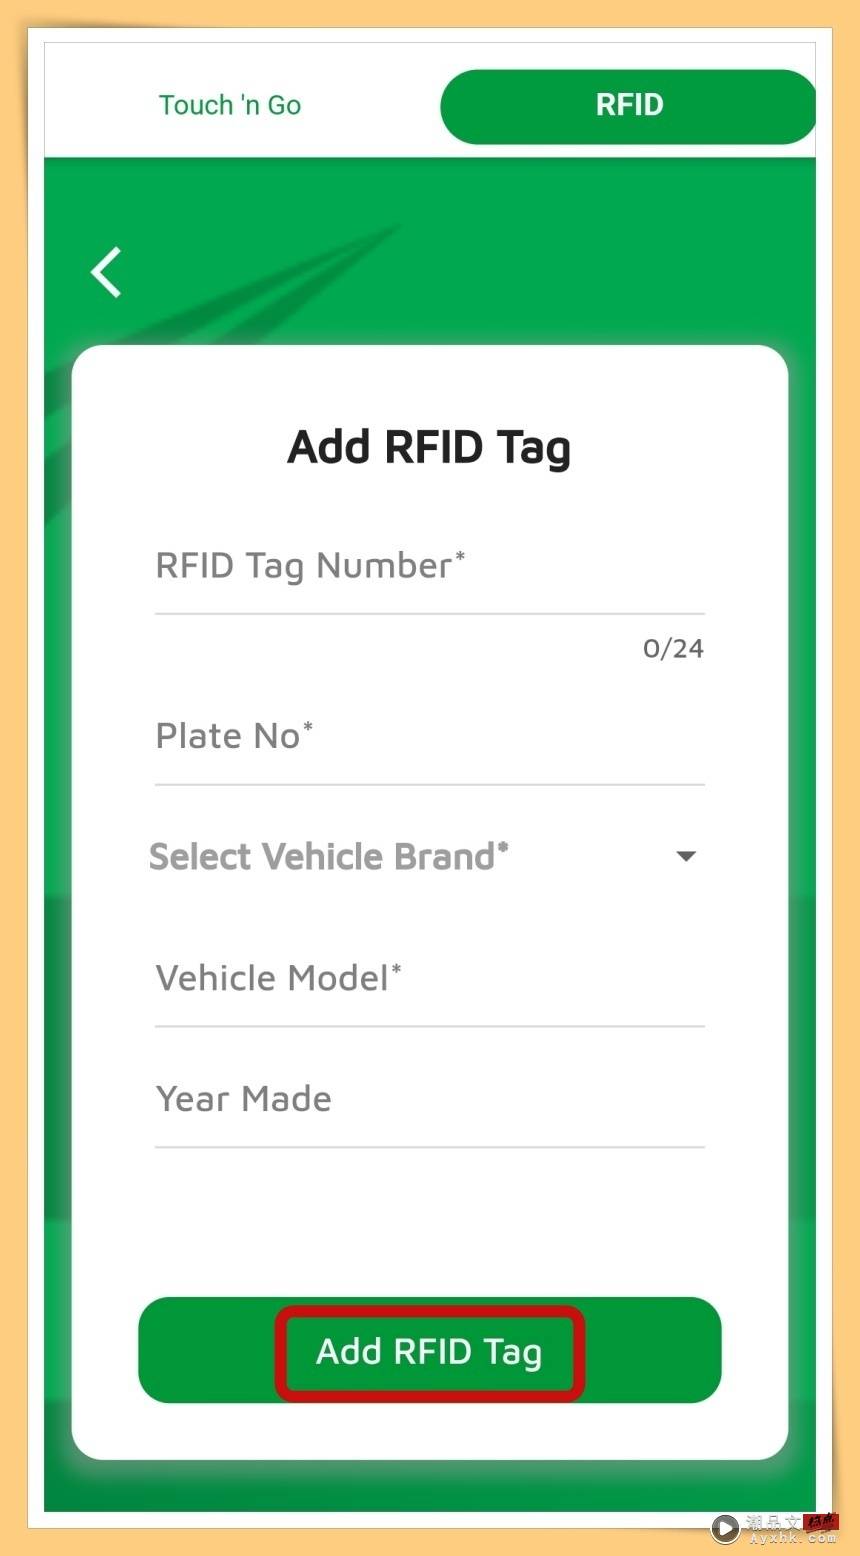 Tips I 过指定收费站可获得积分！赶紧把TNG卡和RFID绑定在这个App！ 更多热点 图5张